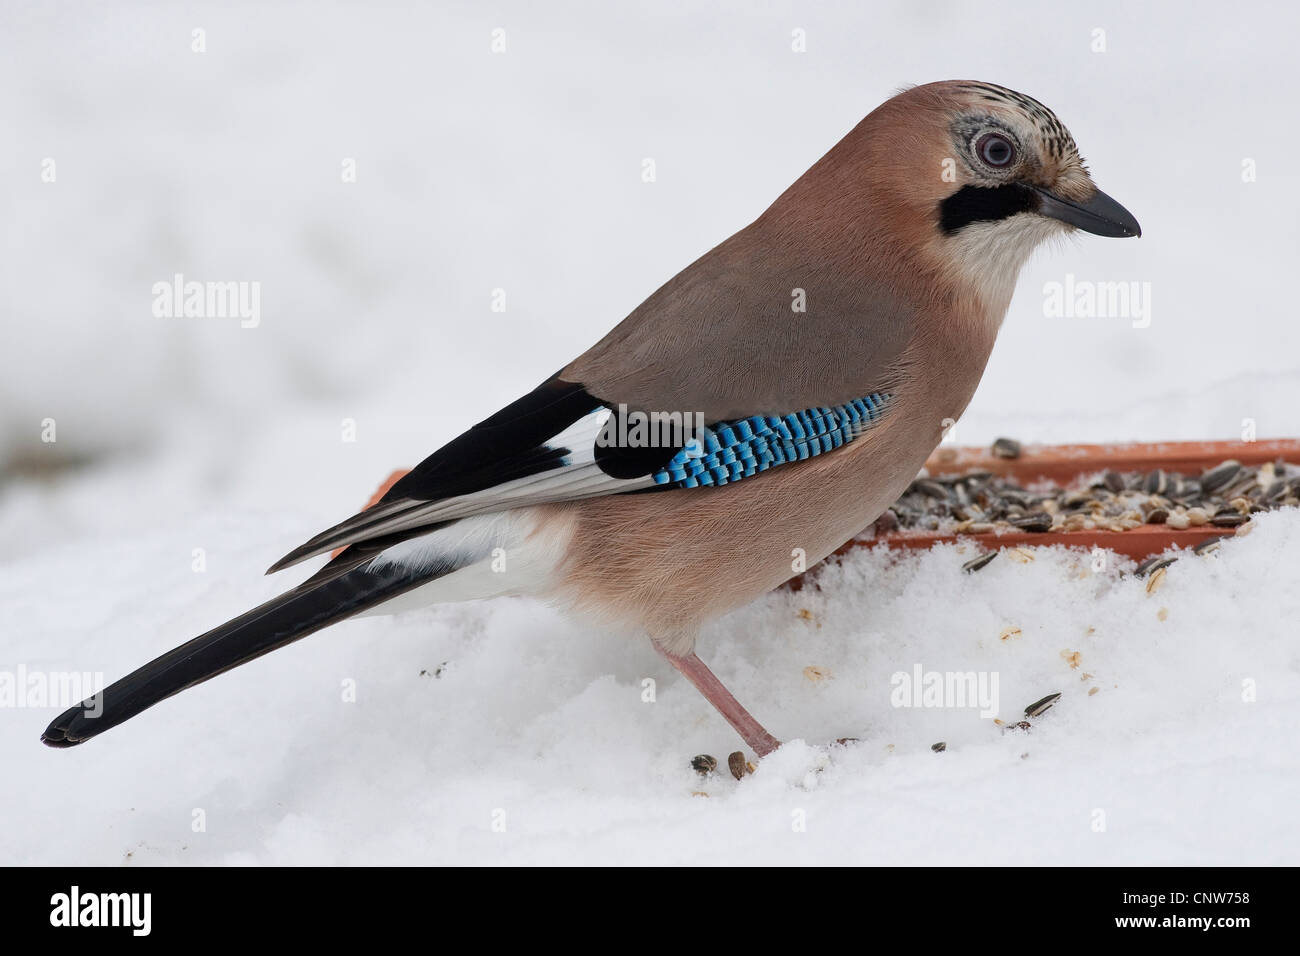 jay (Garrulus glandarius), feeding on grains from snow, Germany Stock Photo